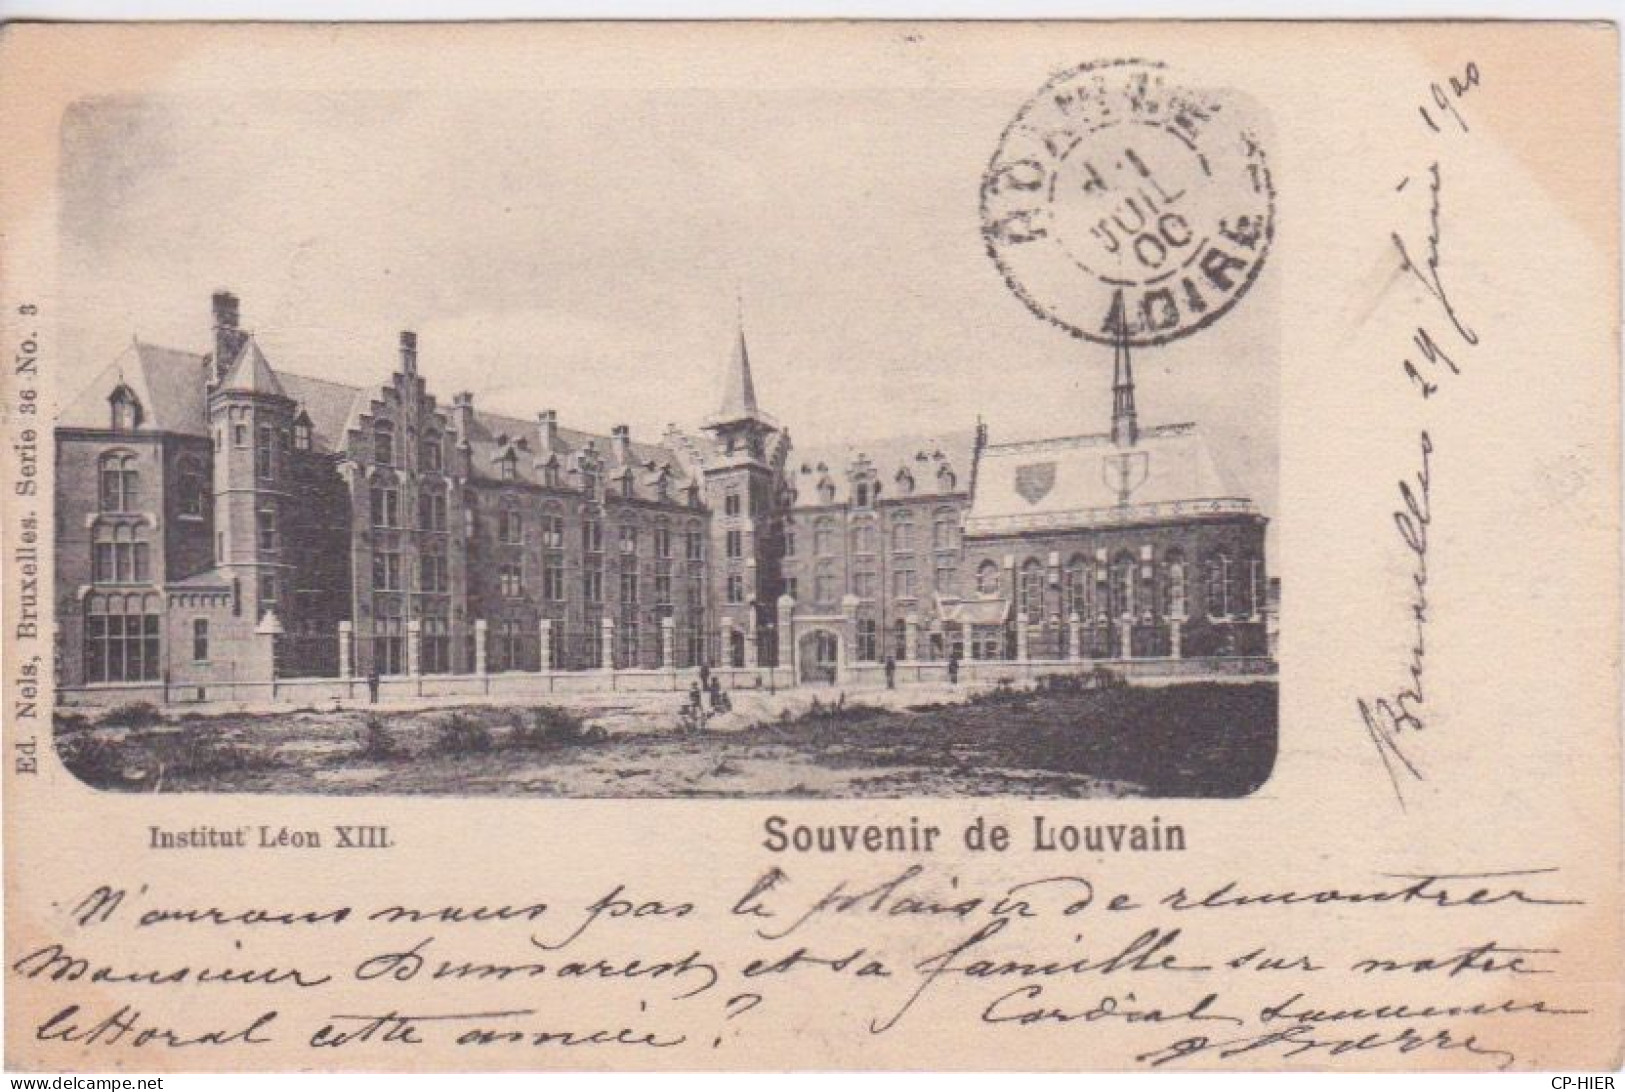 1900 - BELGIQUE - SOUVENIR DE LOUVAIN - INSTITUT LEON XIII - Ottignies-Louvain-la-Neuve